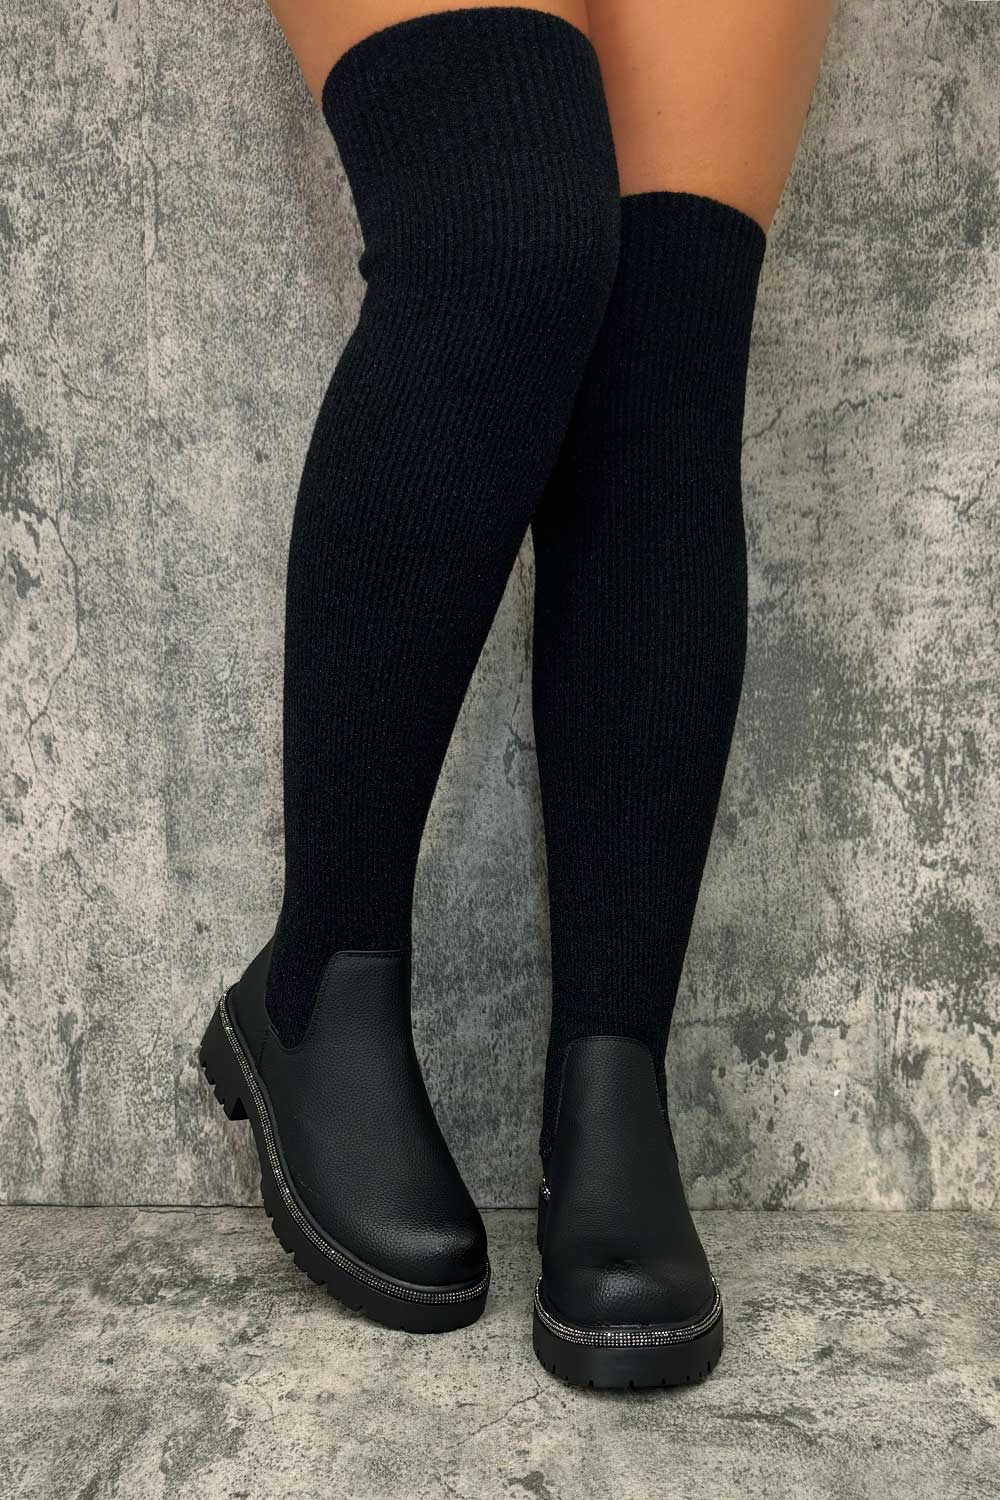 womens knee high boots sale uk